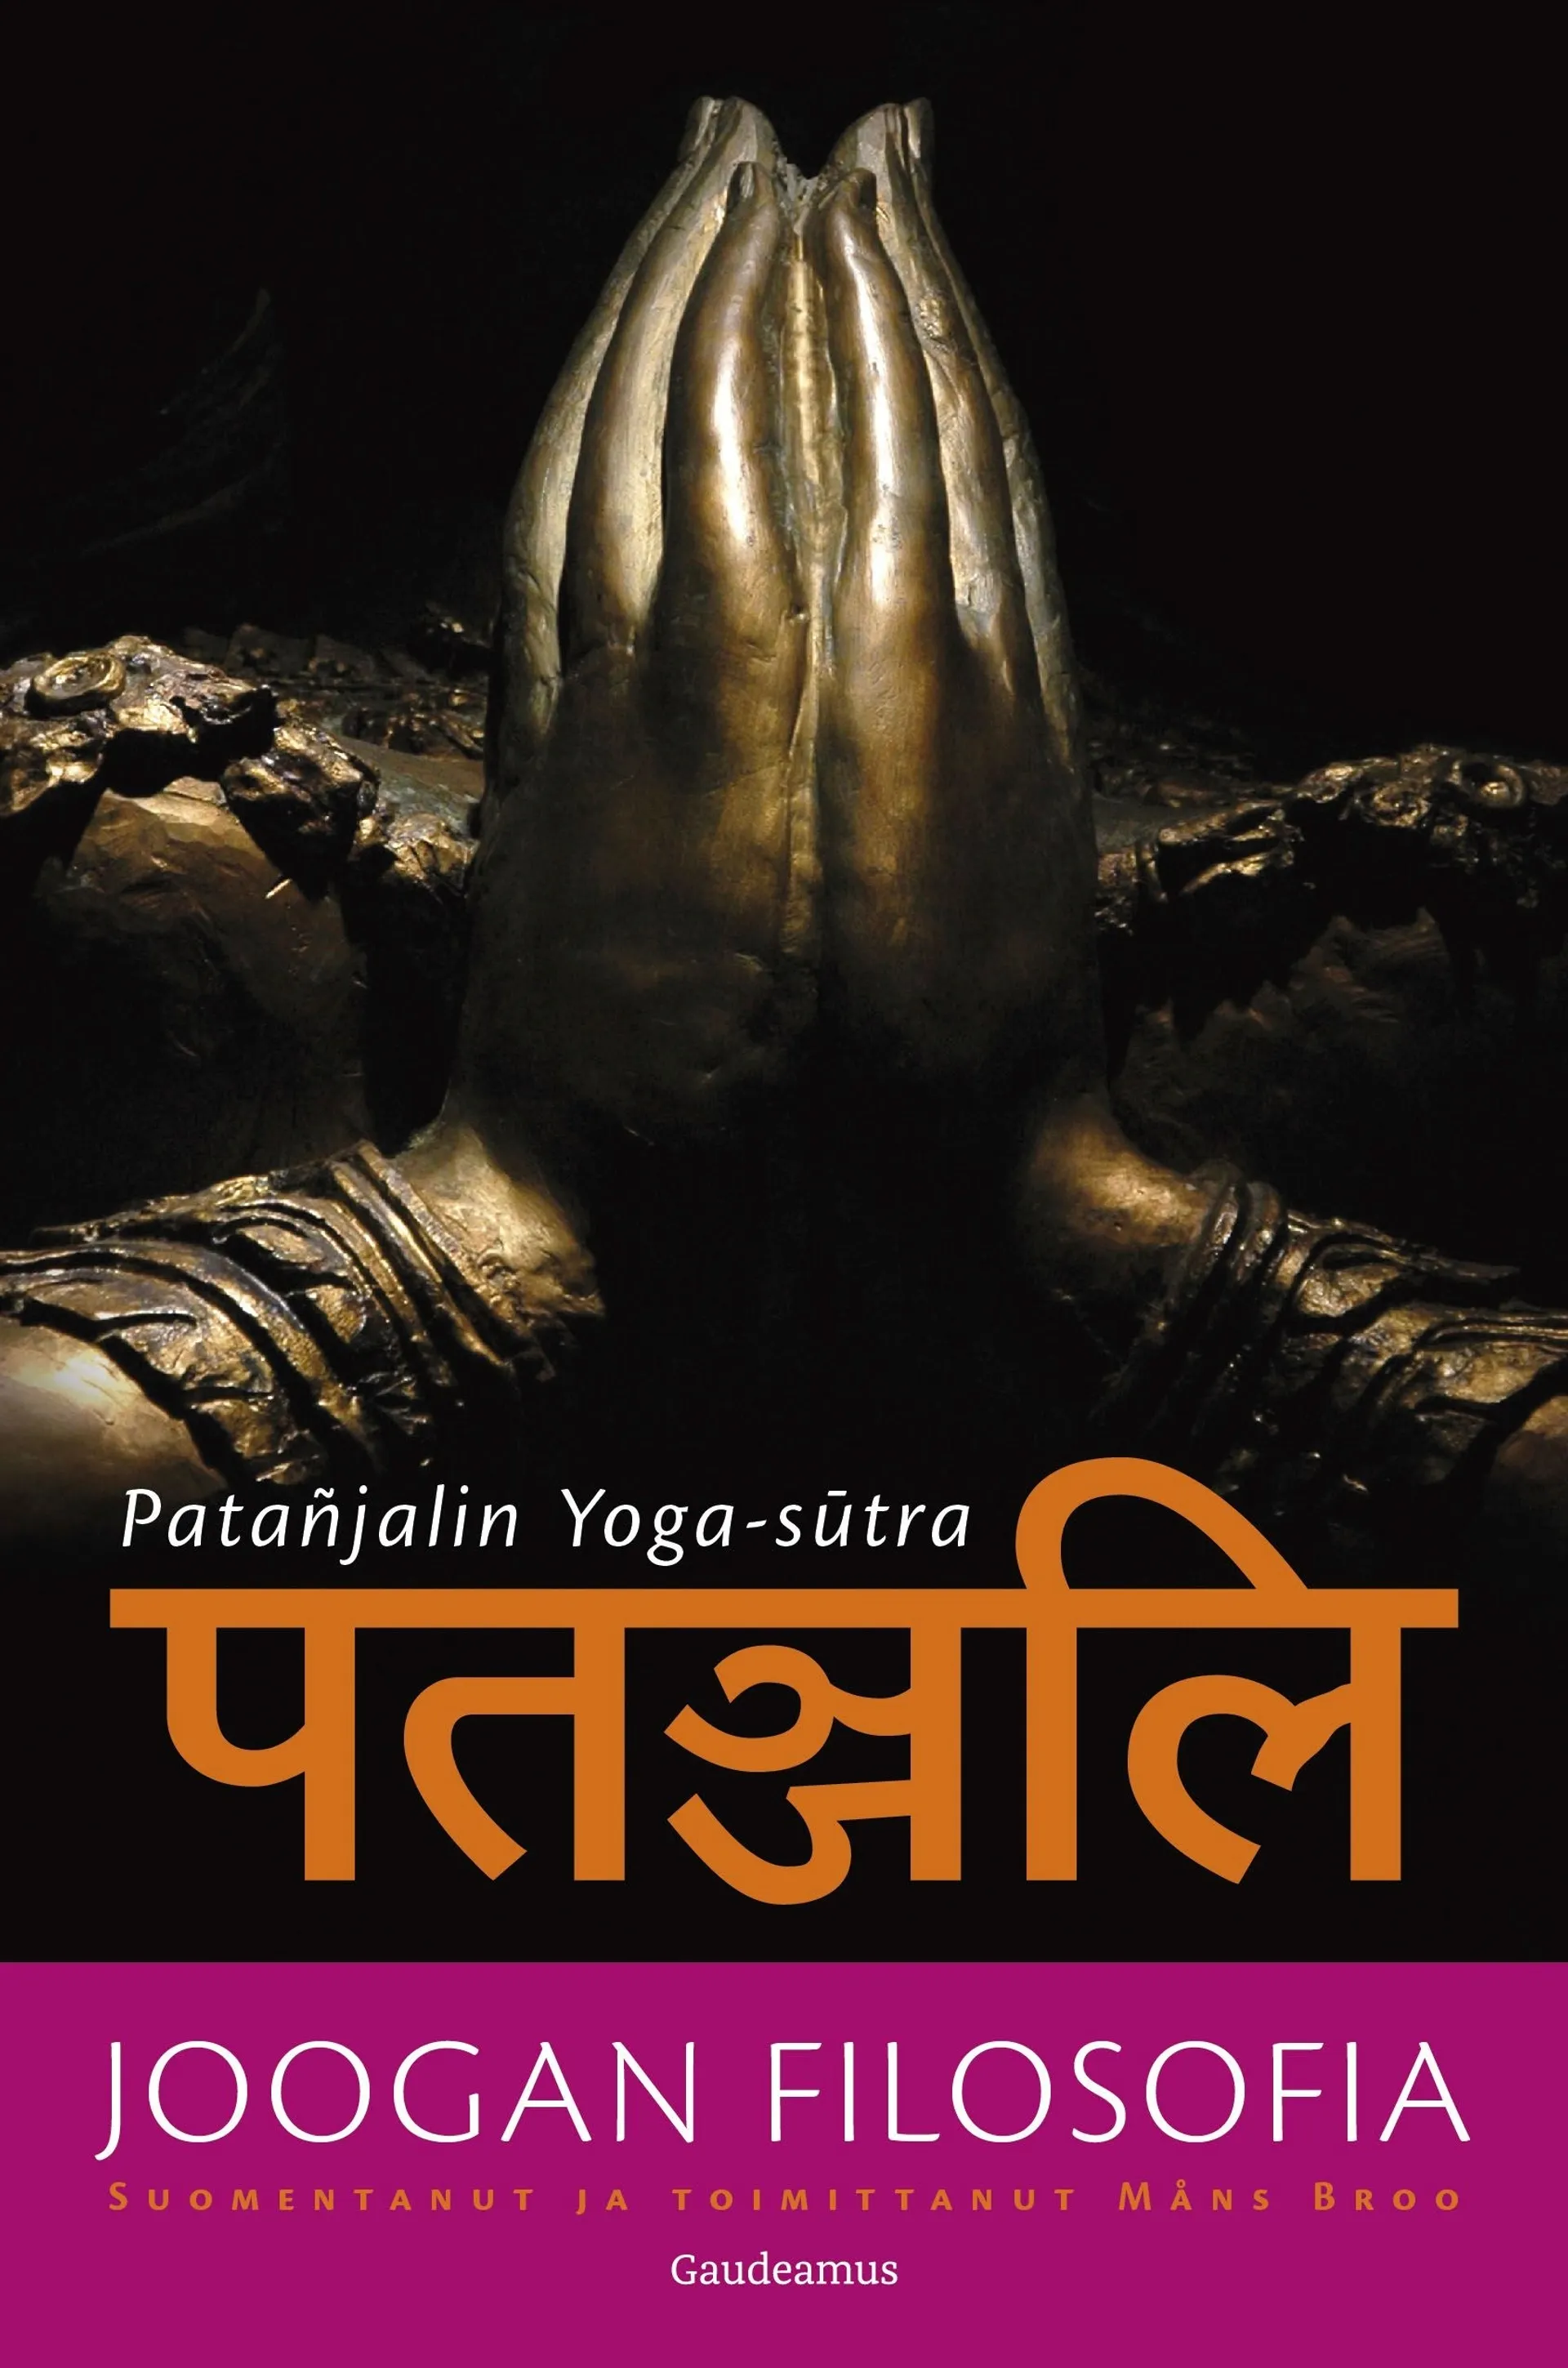 Joogan filosofia - Patanjalin Yoga-sutra